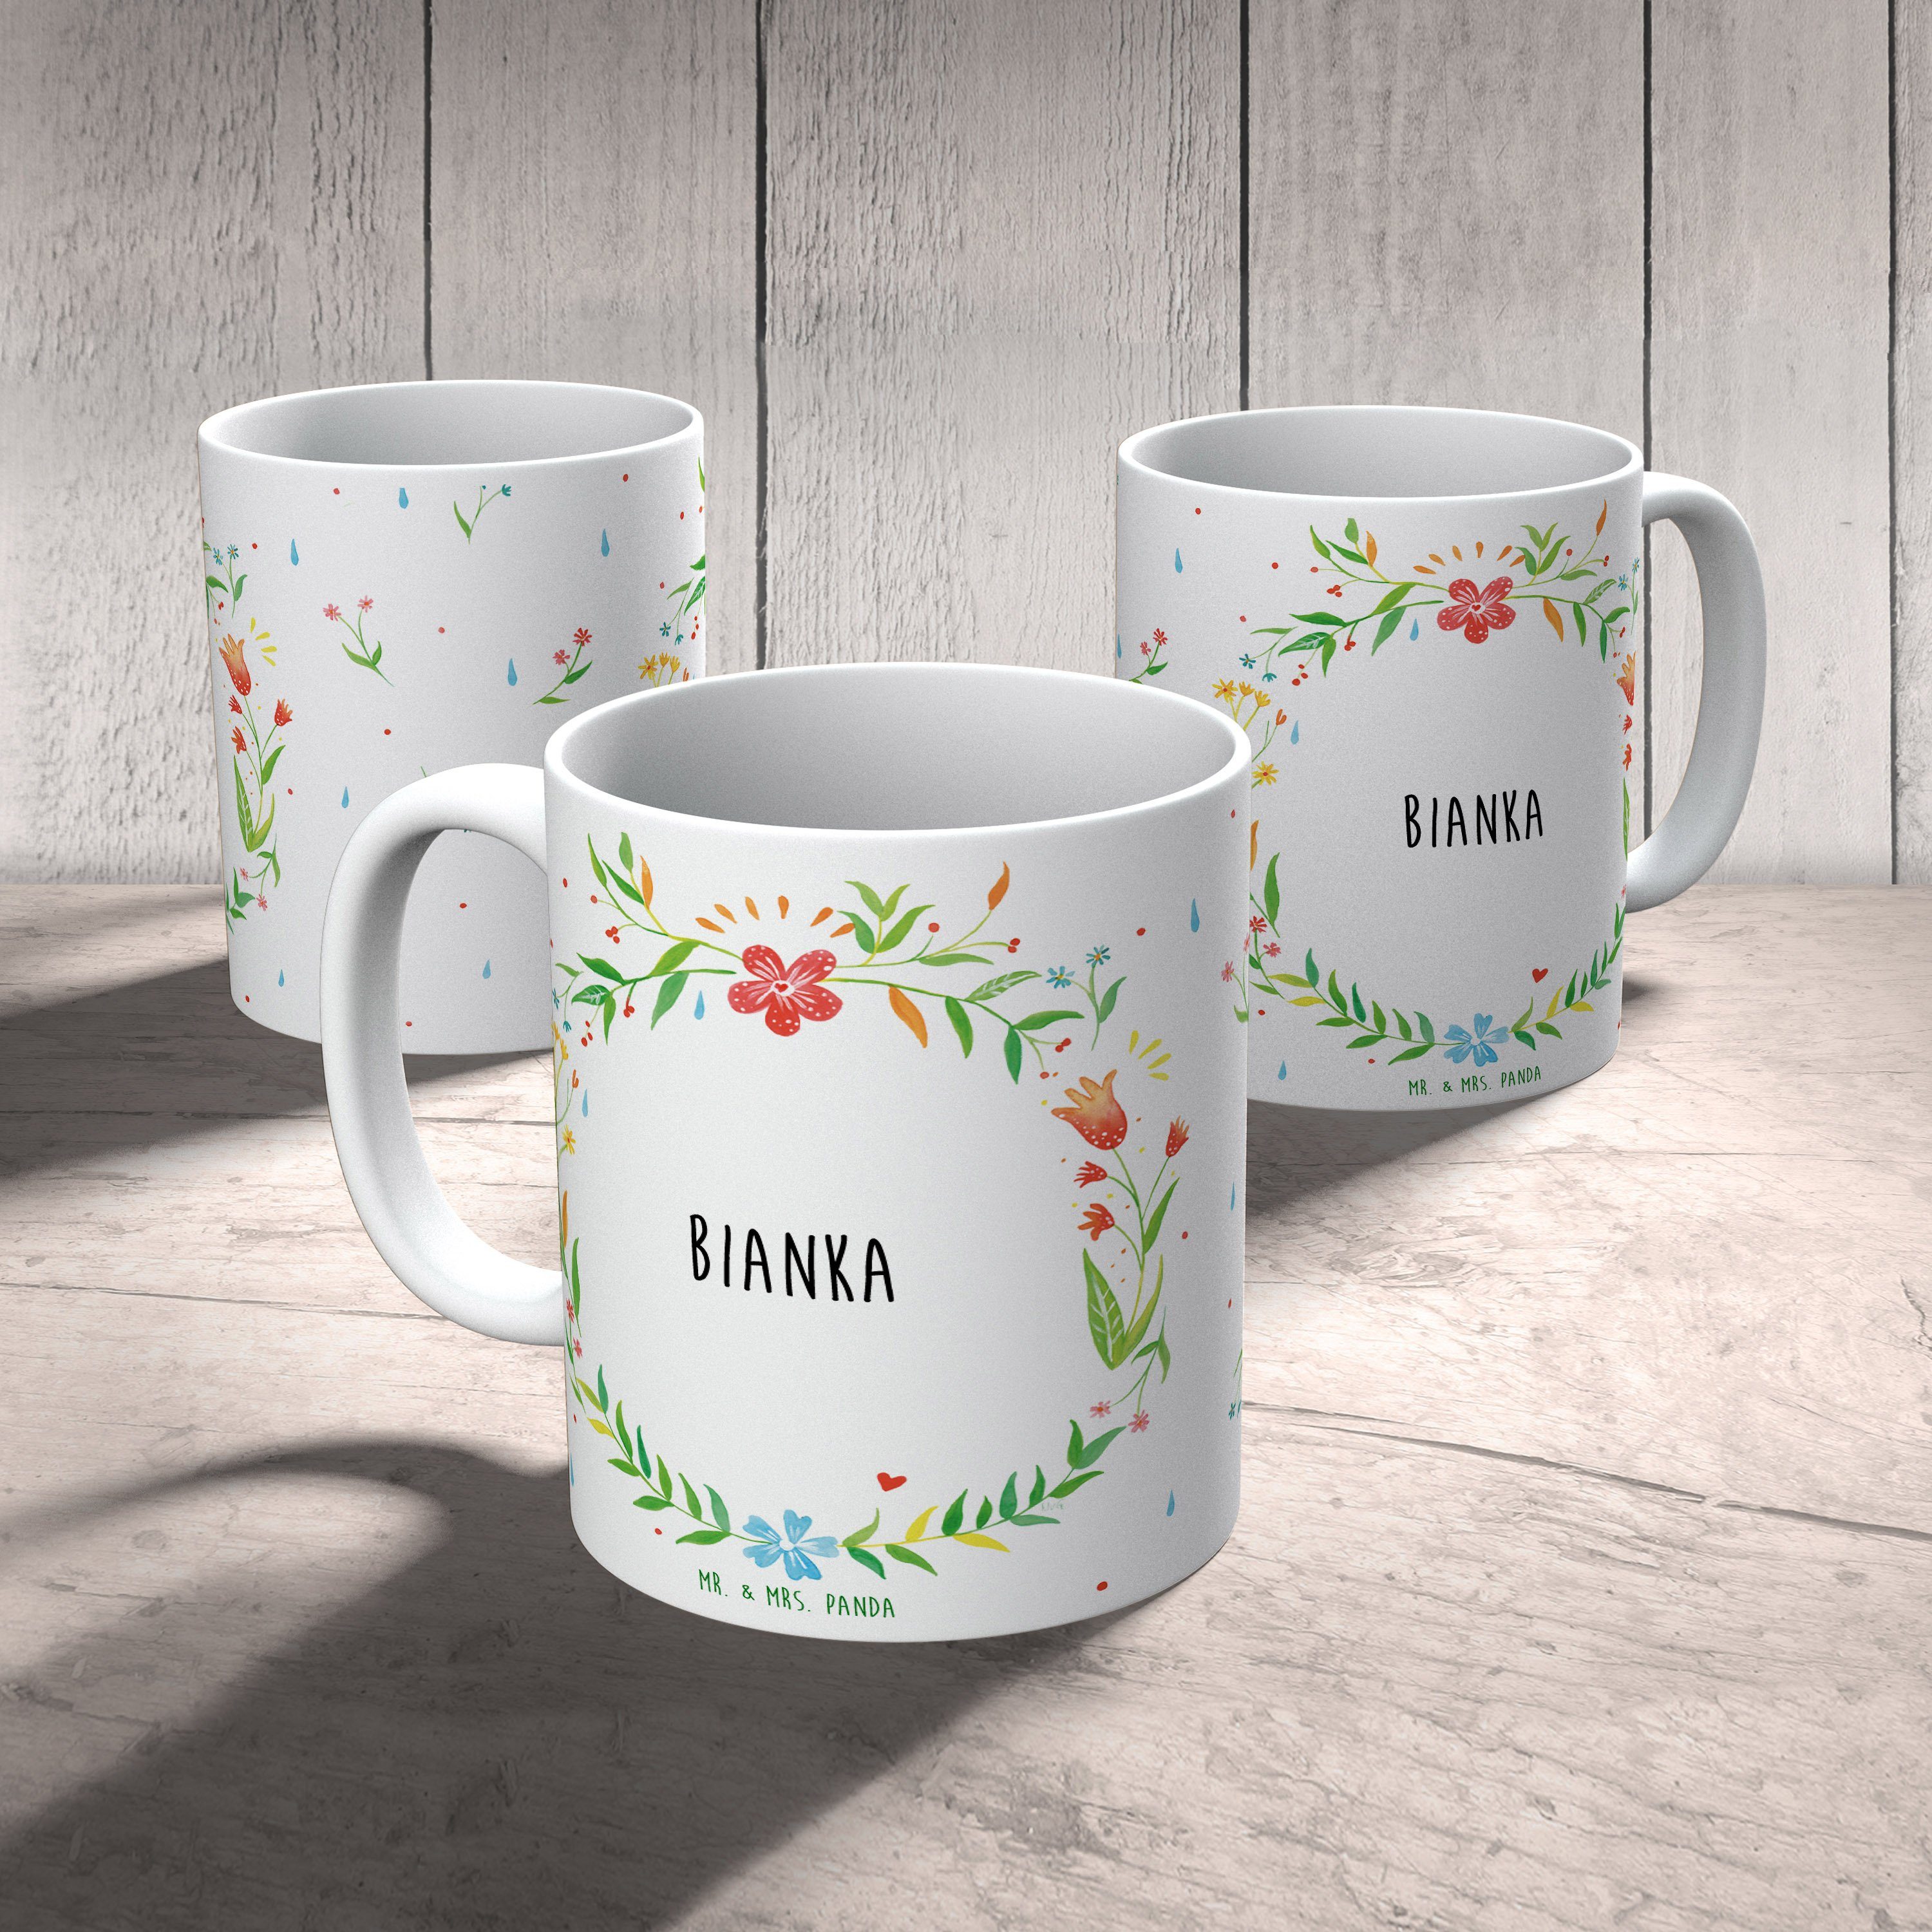 Mr. & Geschenk, Mrs. Tasse, Teetasse, Geschenk Panda Keramik - Bianka Teebecher, Tasse Kaffeebecher,